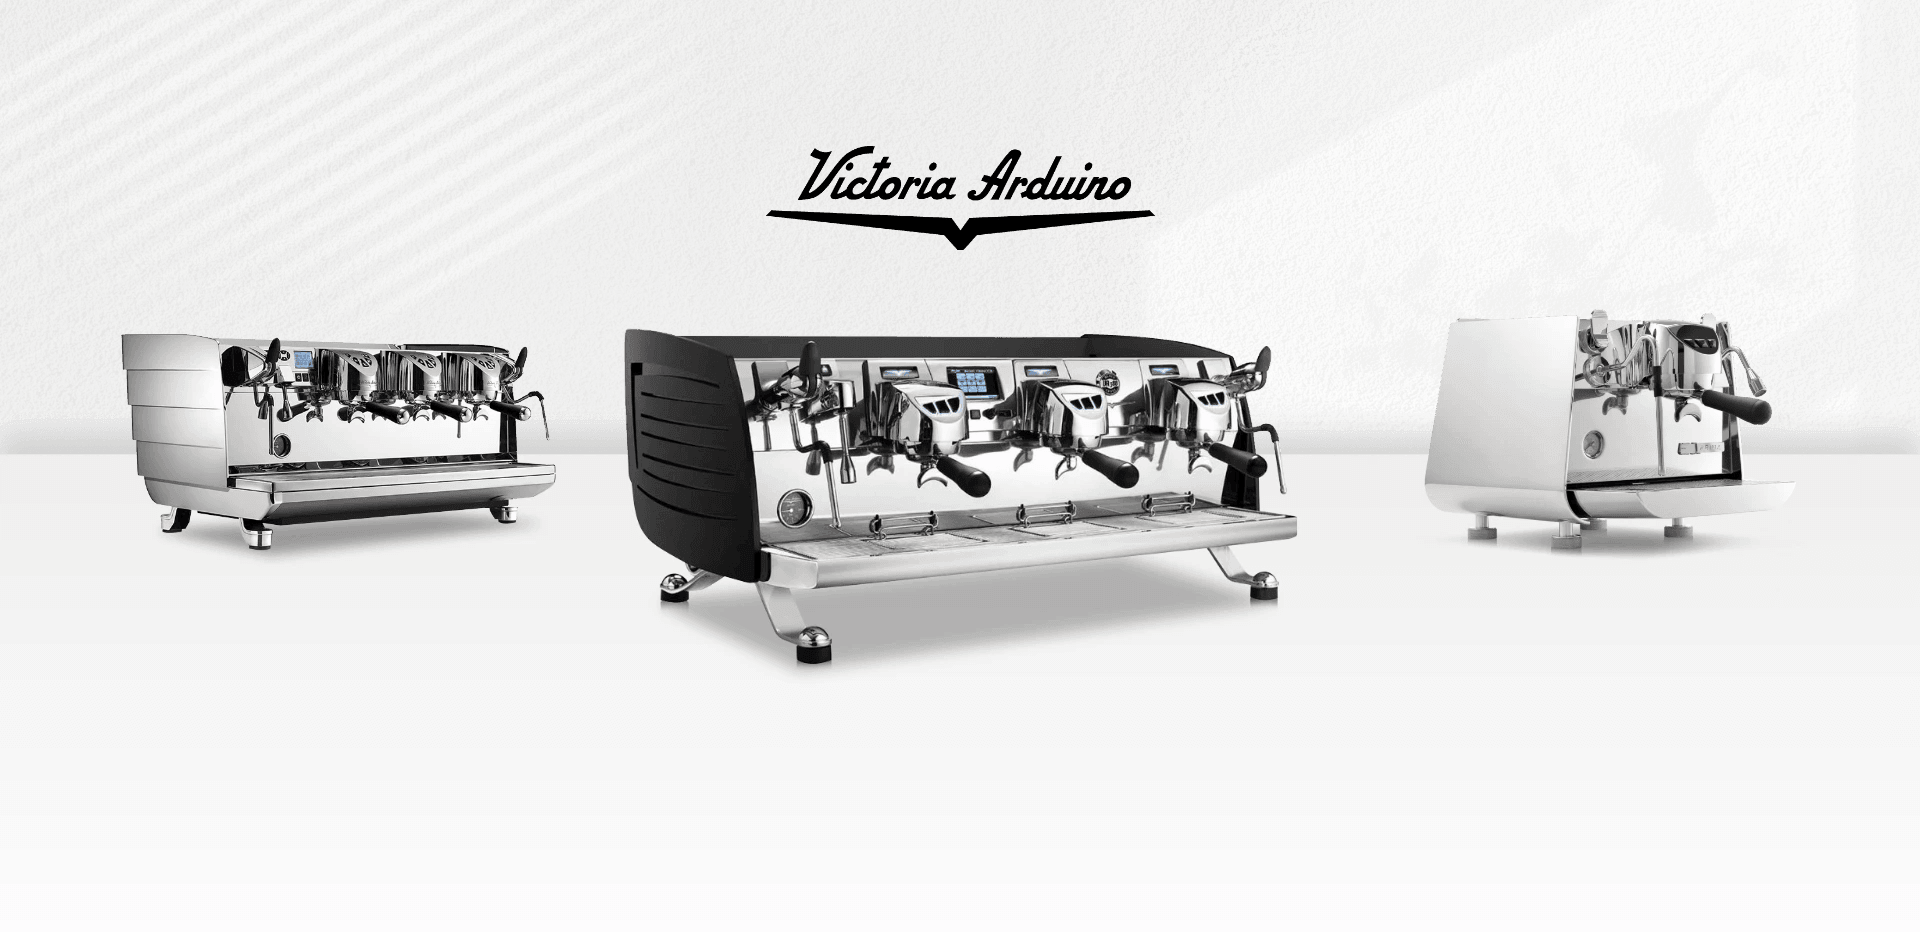 Victoria Arduino - Espresso Machines